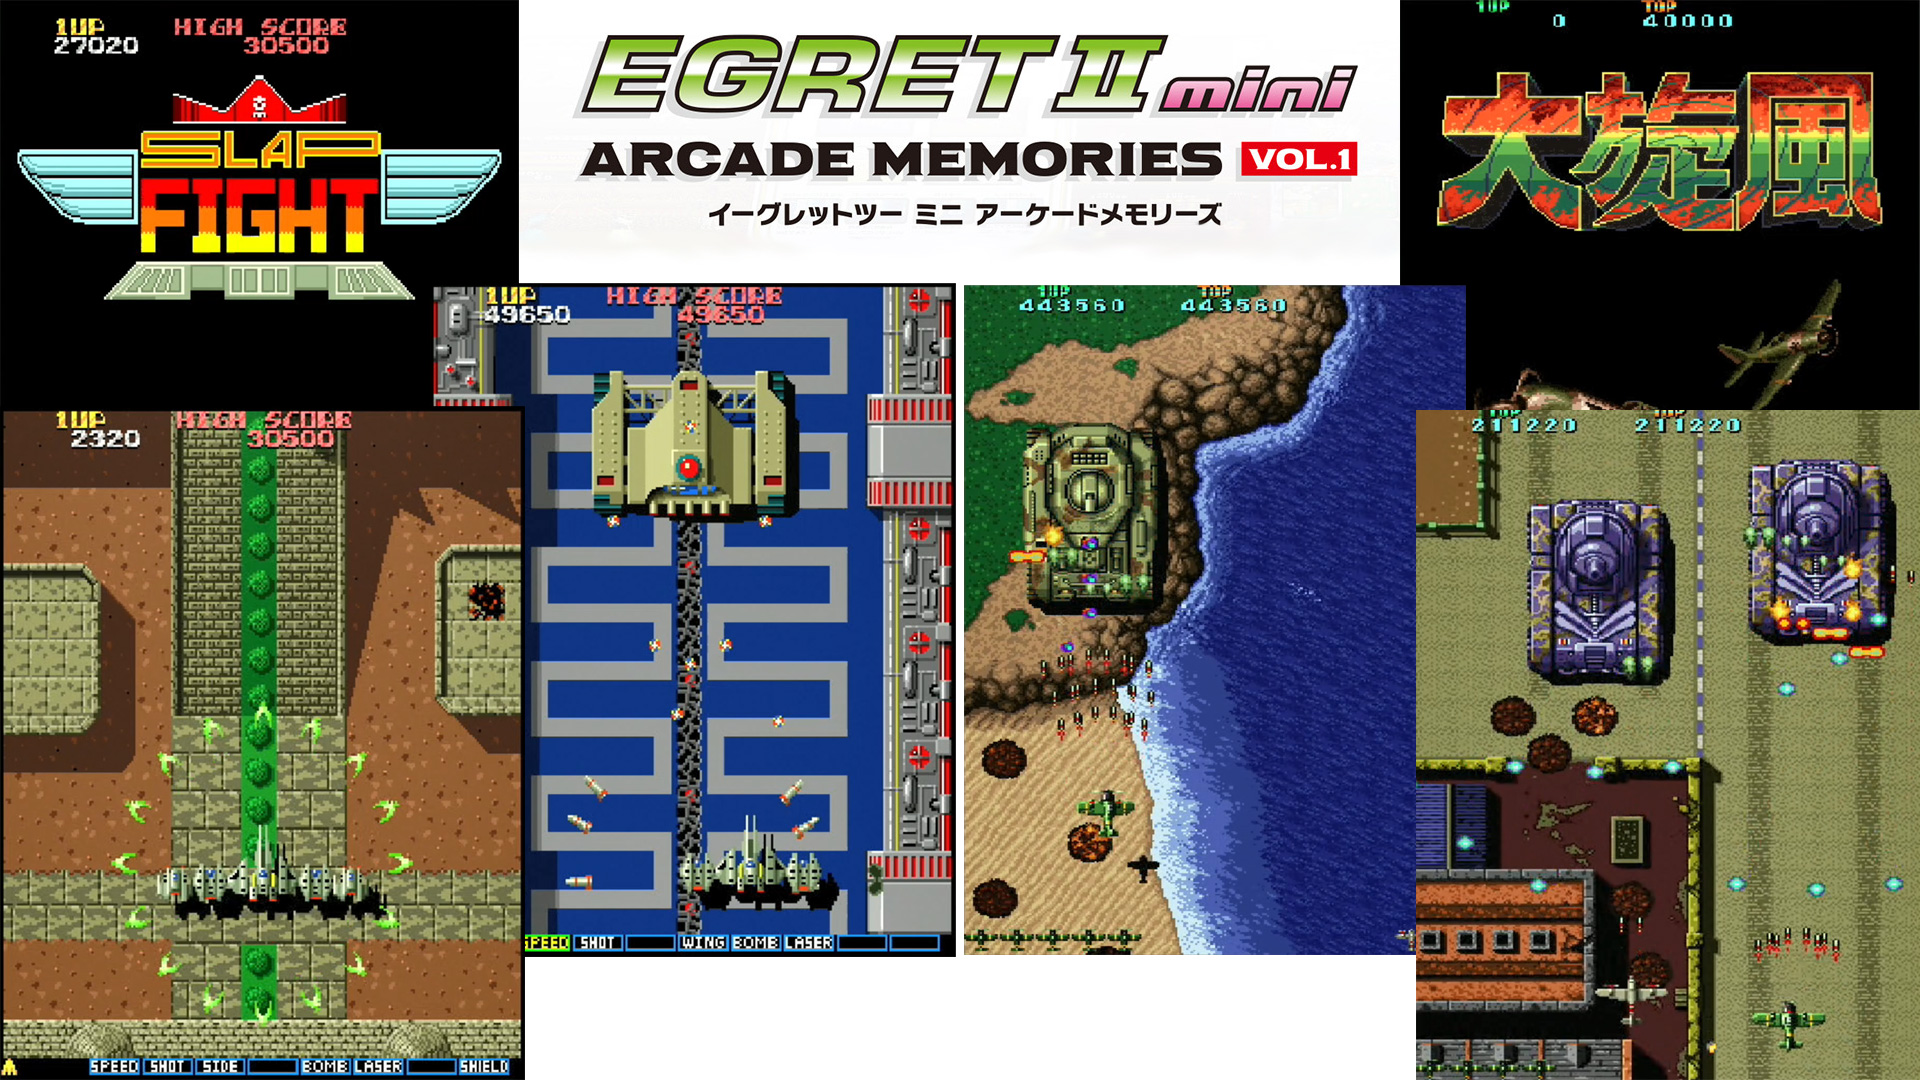 TAITO [Arcade Memories VOL.1] released